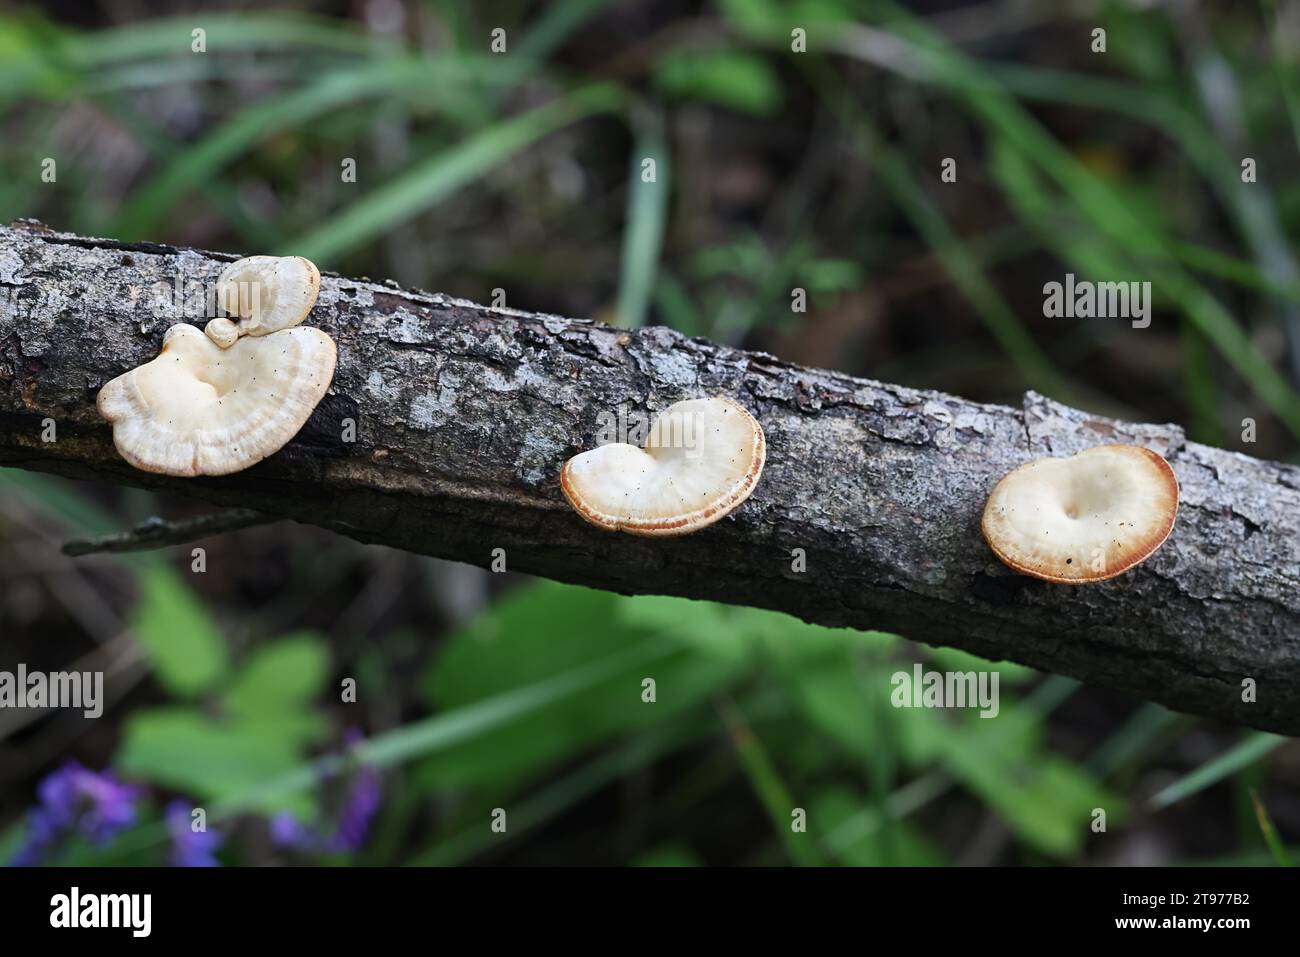 Neofavolus suavissimus, also known as Lentinus suavissimus, an oysterling mushroom from Finland, no common English name Stock Photo